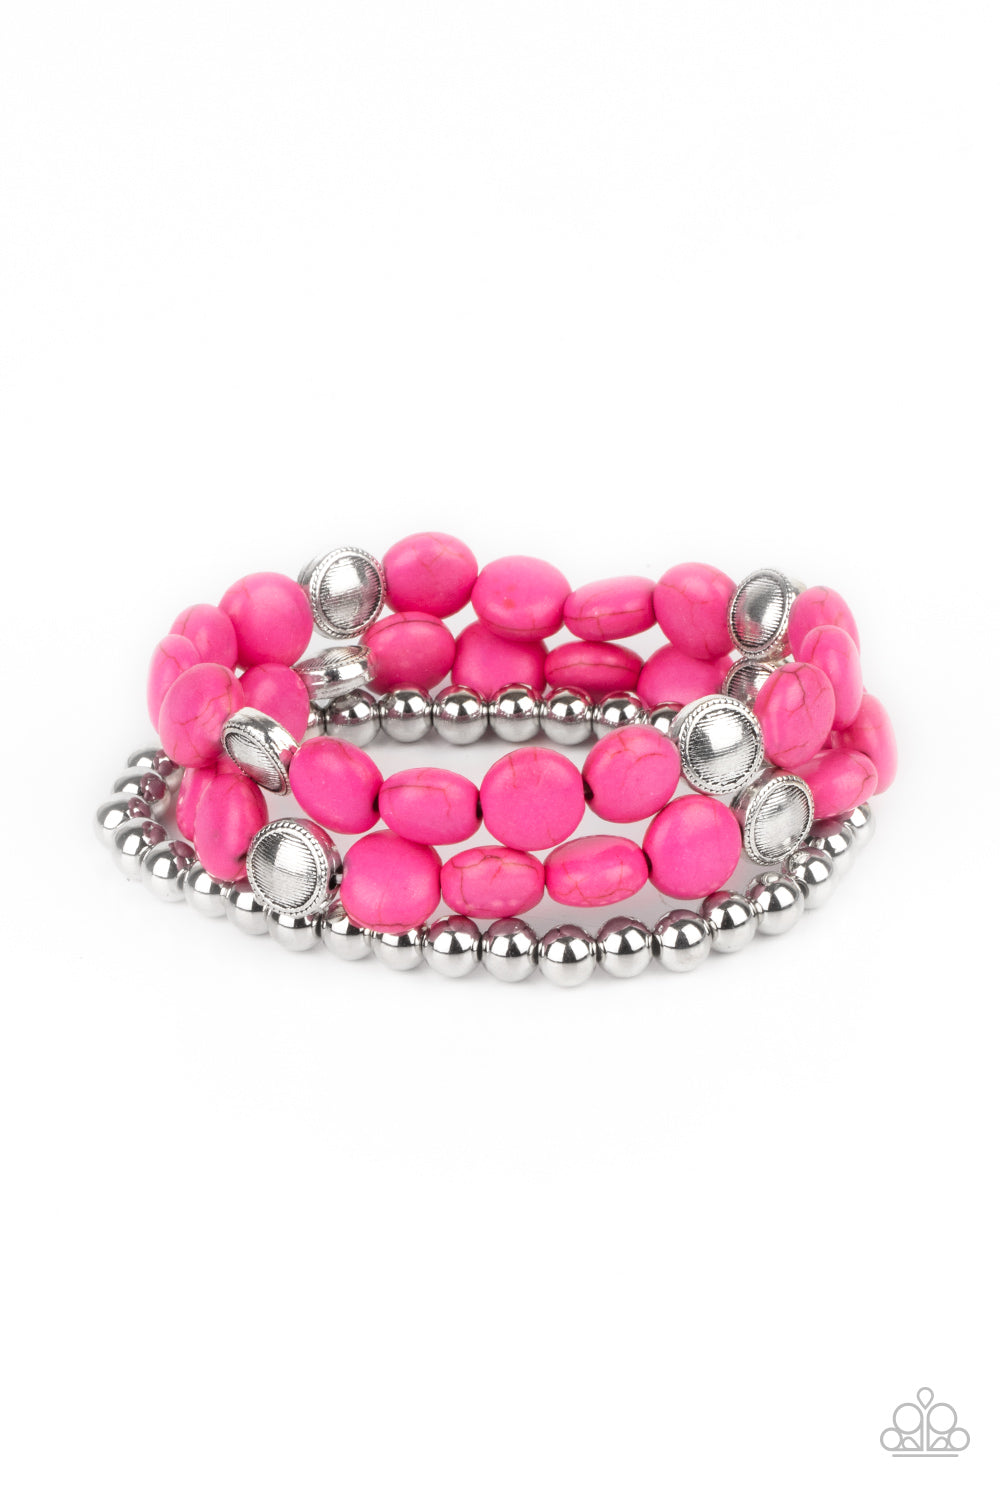 Desert Verbena - pink - Paparazzi bracelet